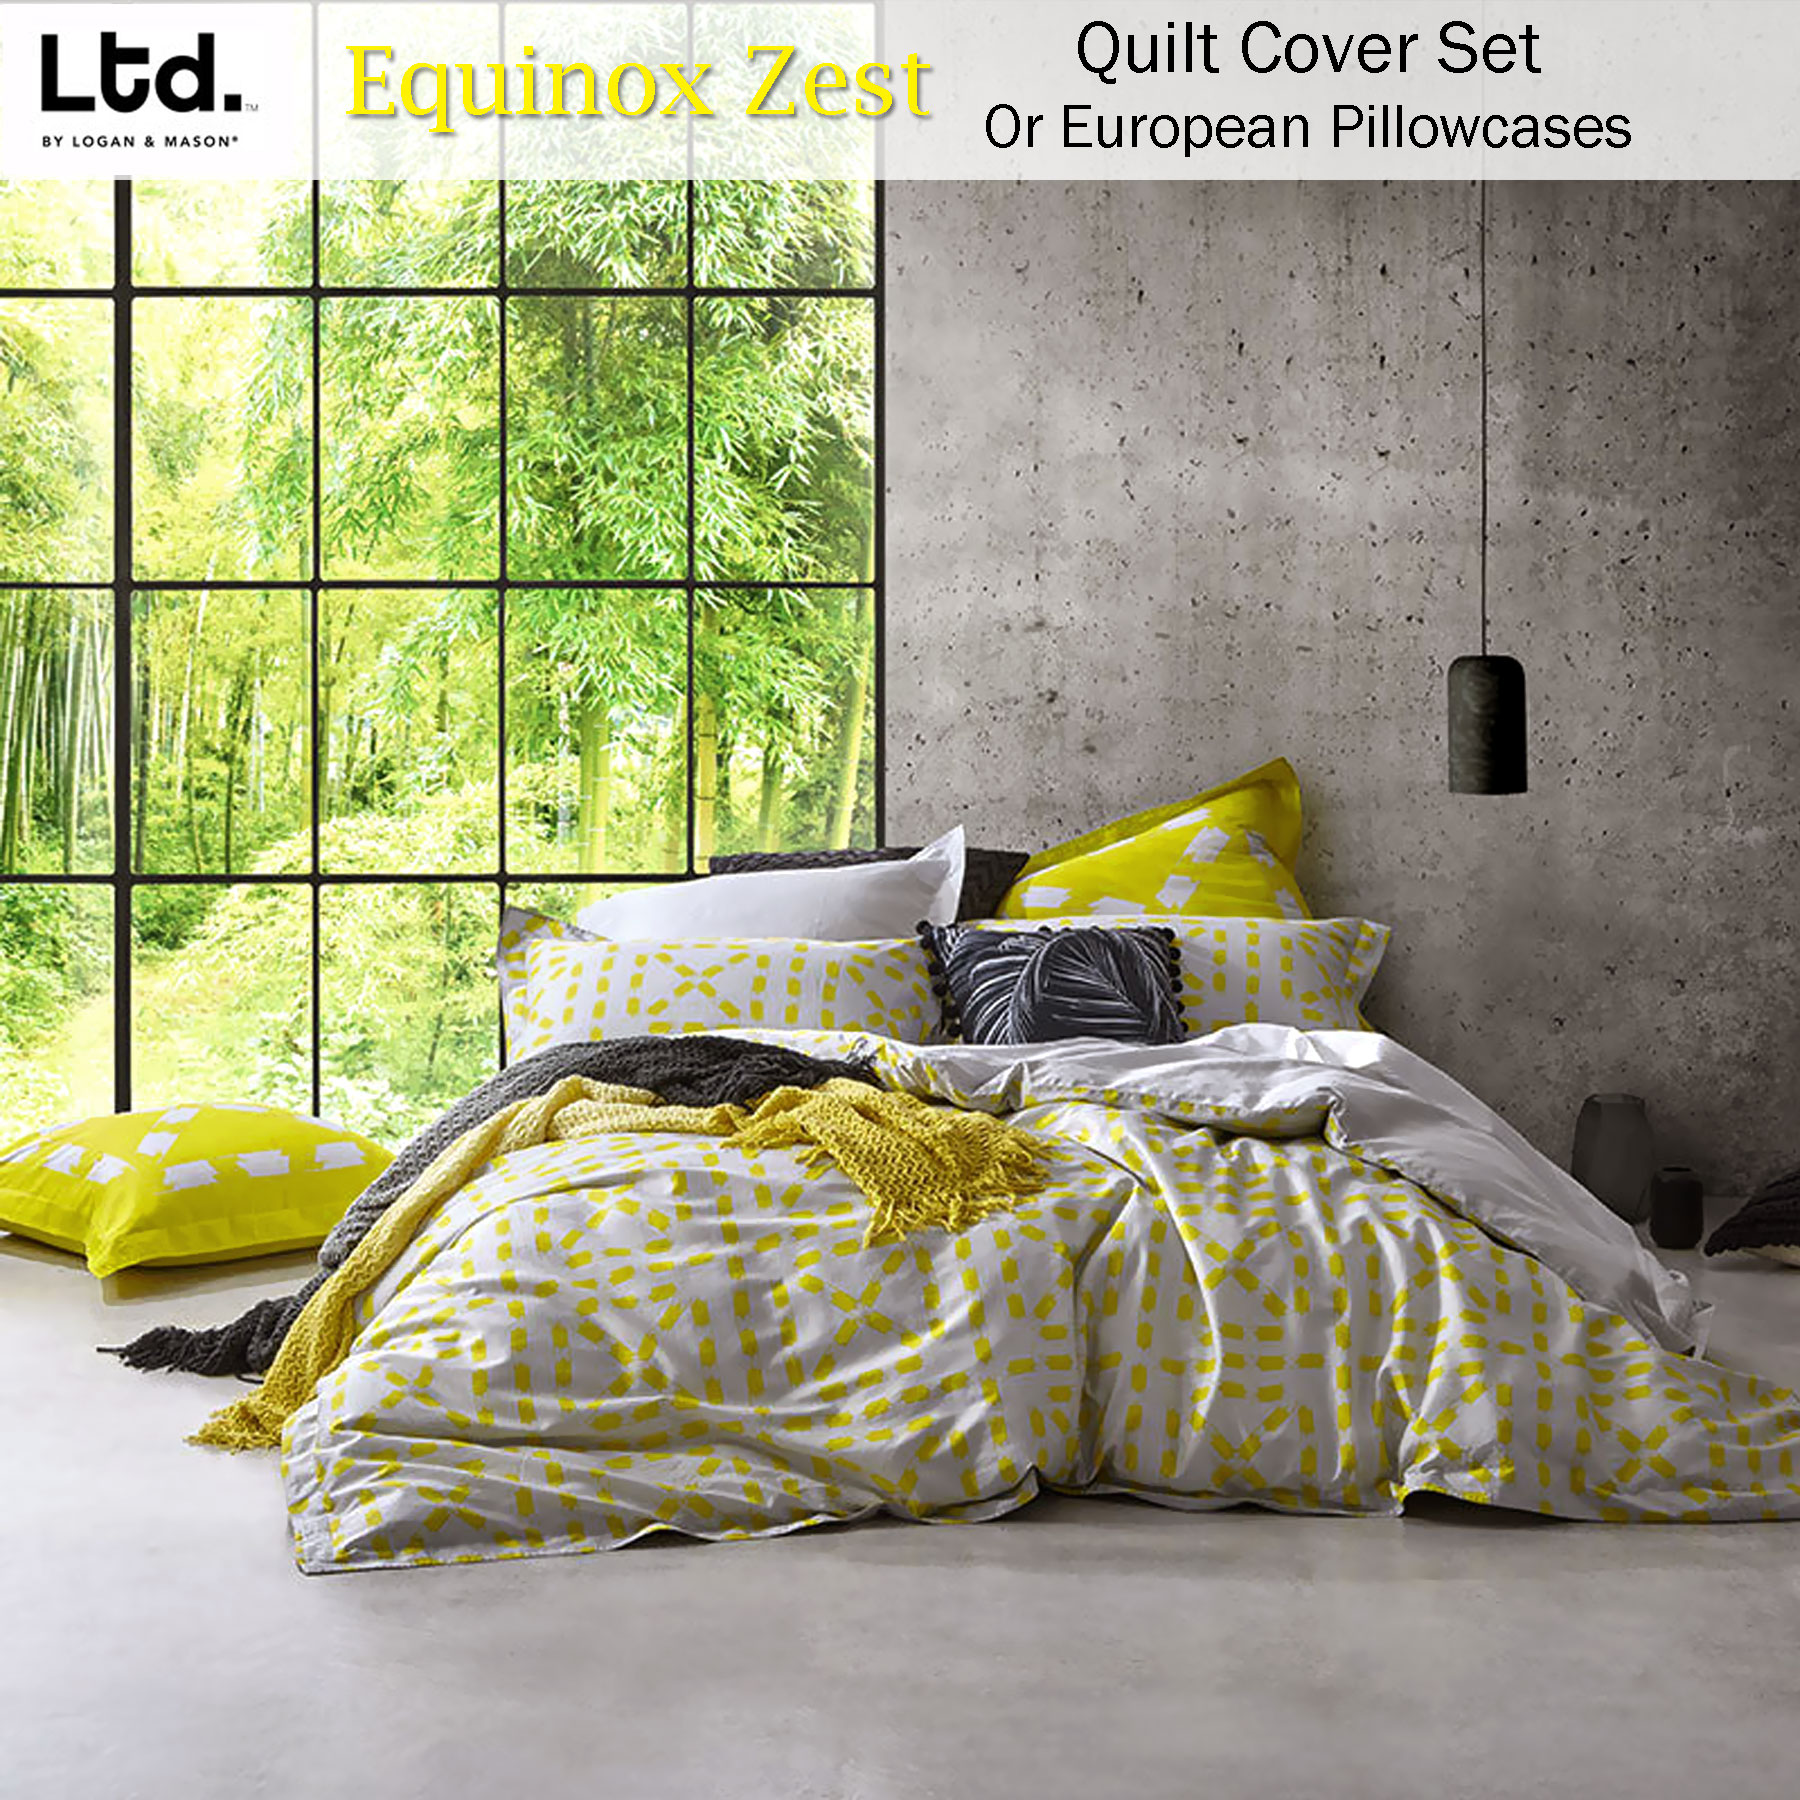 Equinox Zest Quilt Cover Set or European Pillowcases by Ltd